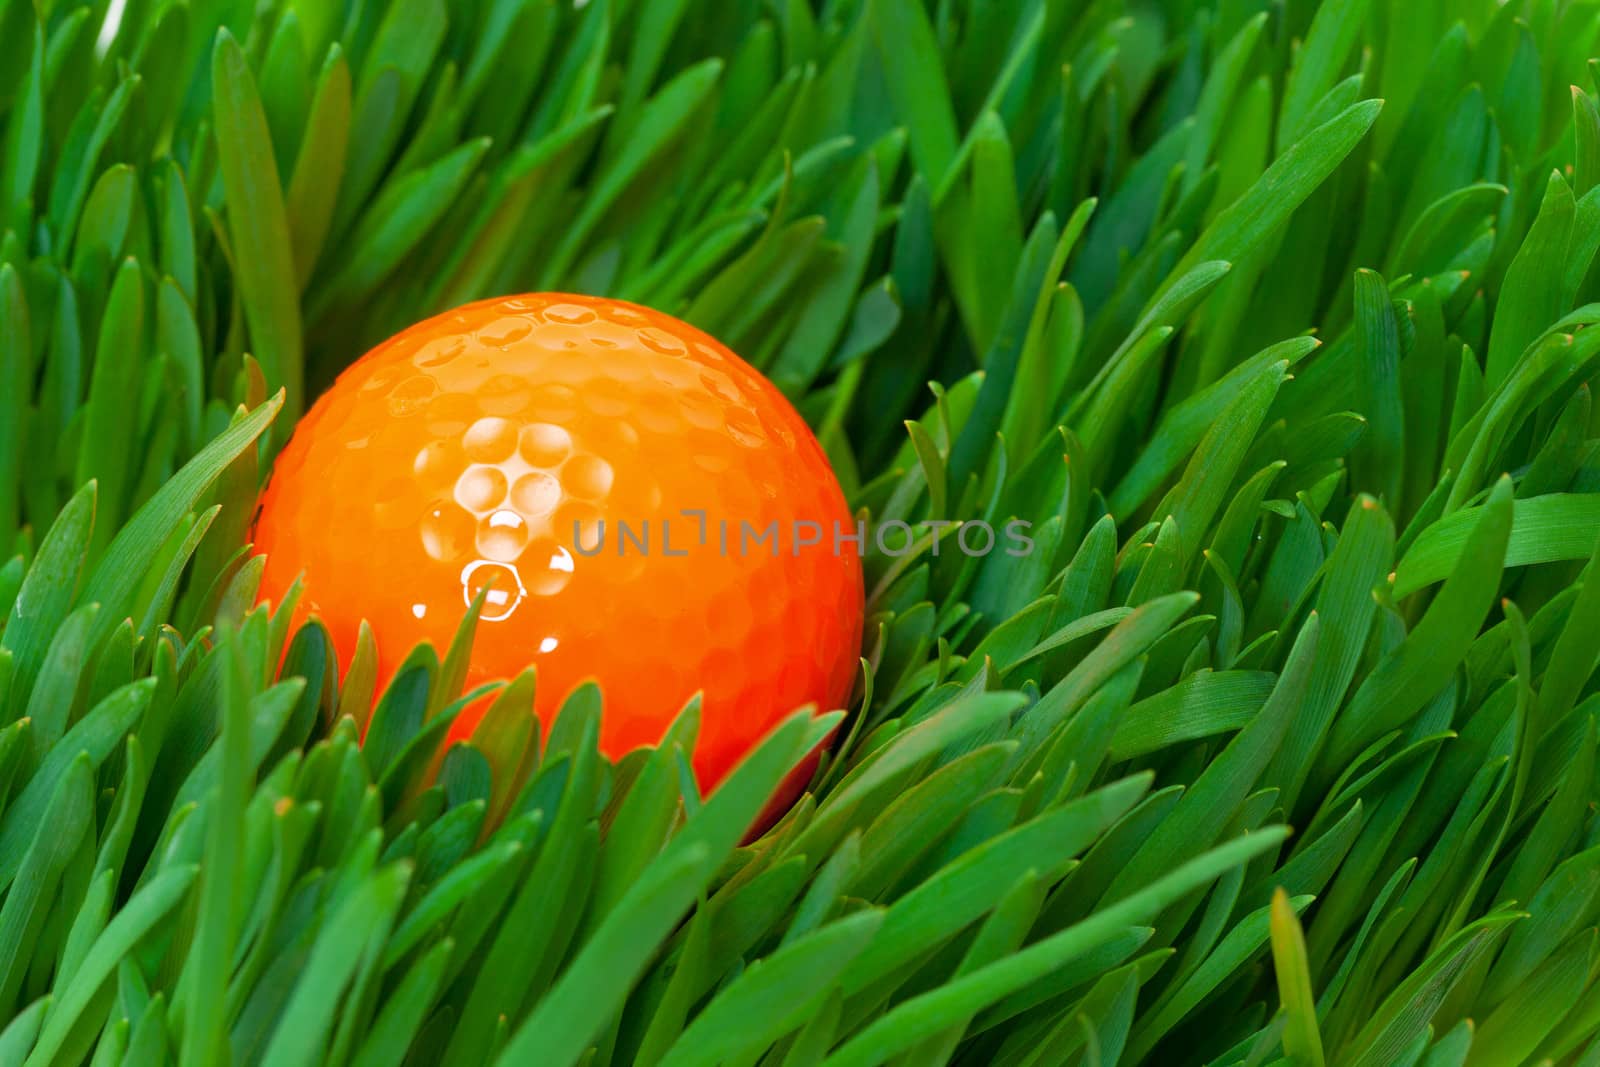 Orange golf ball in the long grass, closeup